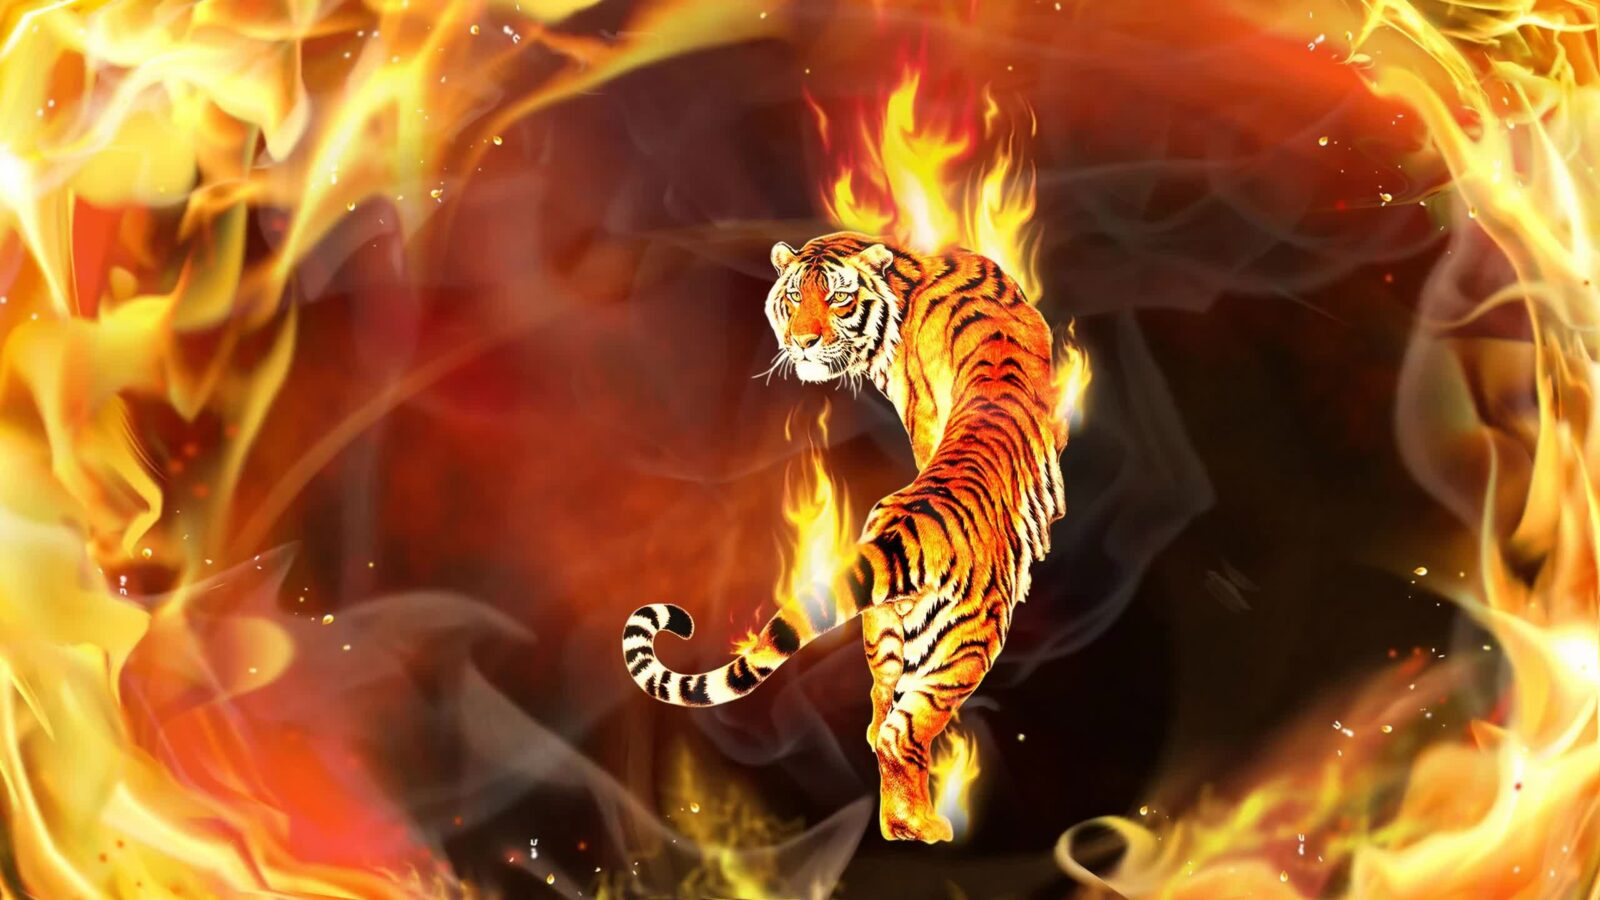 Tiger In Flames Digital Art 2K Quality - Free Live Wallpaper